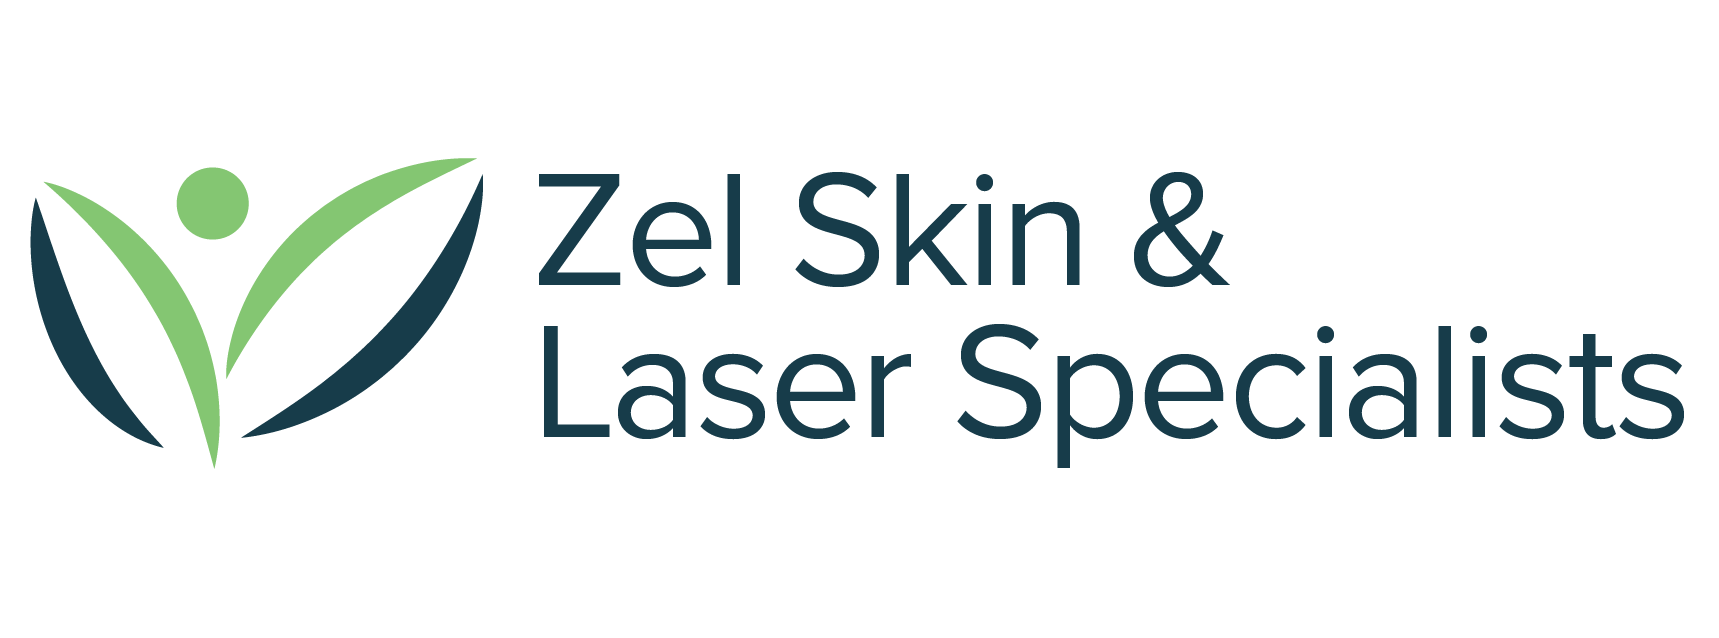 Zel Skin & Laser Specialists